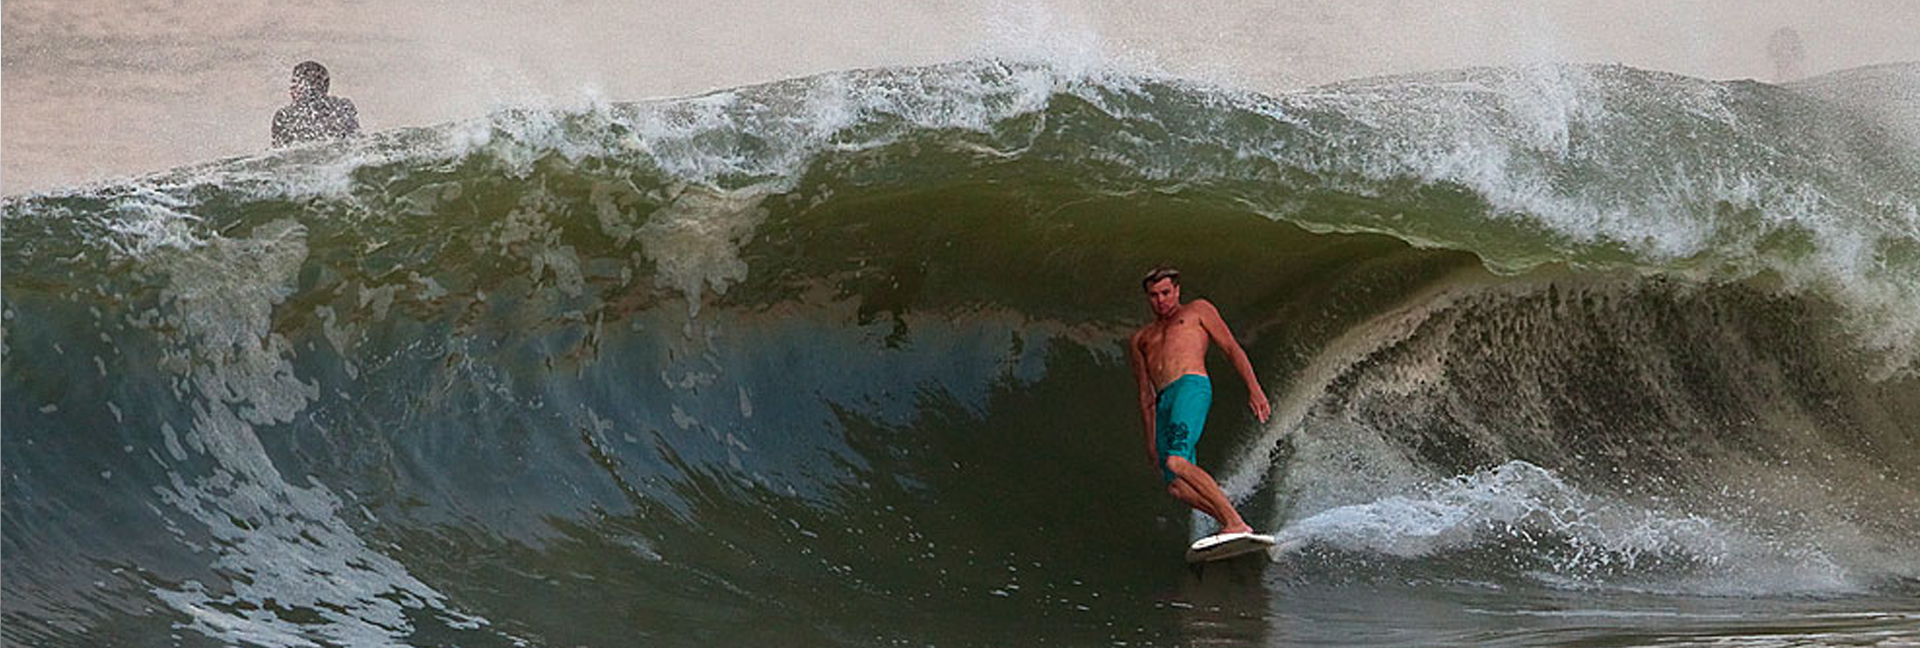 man surfing a huge wave in blue bathing suit